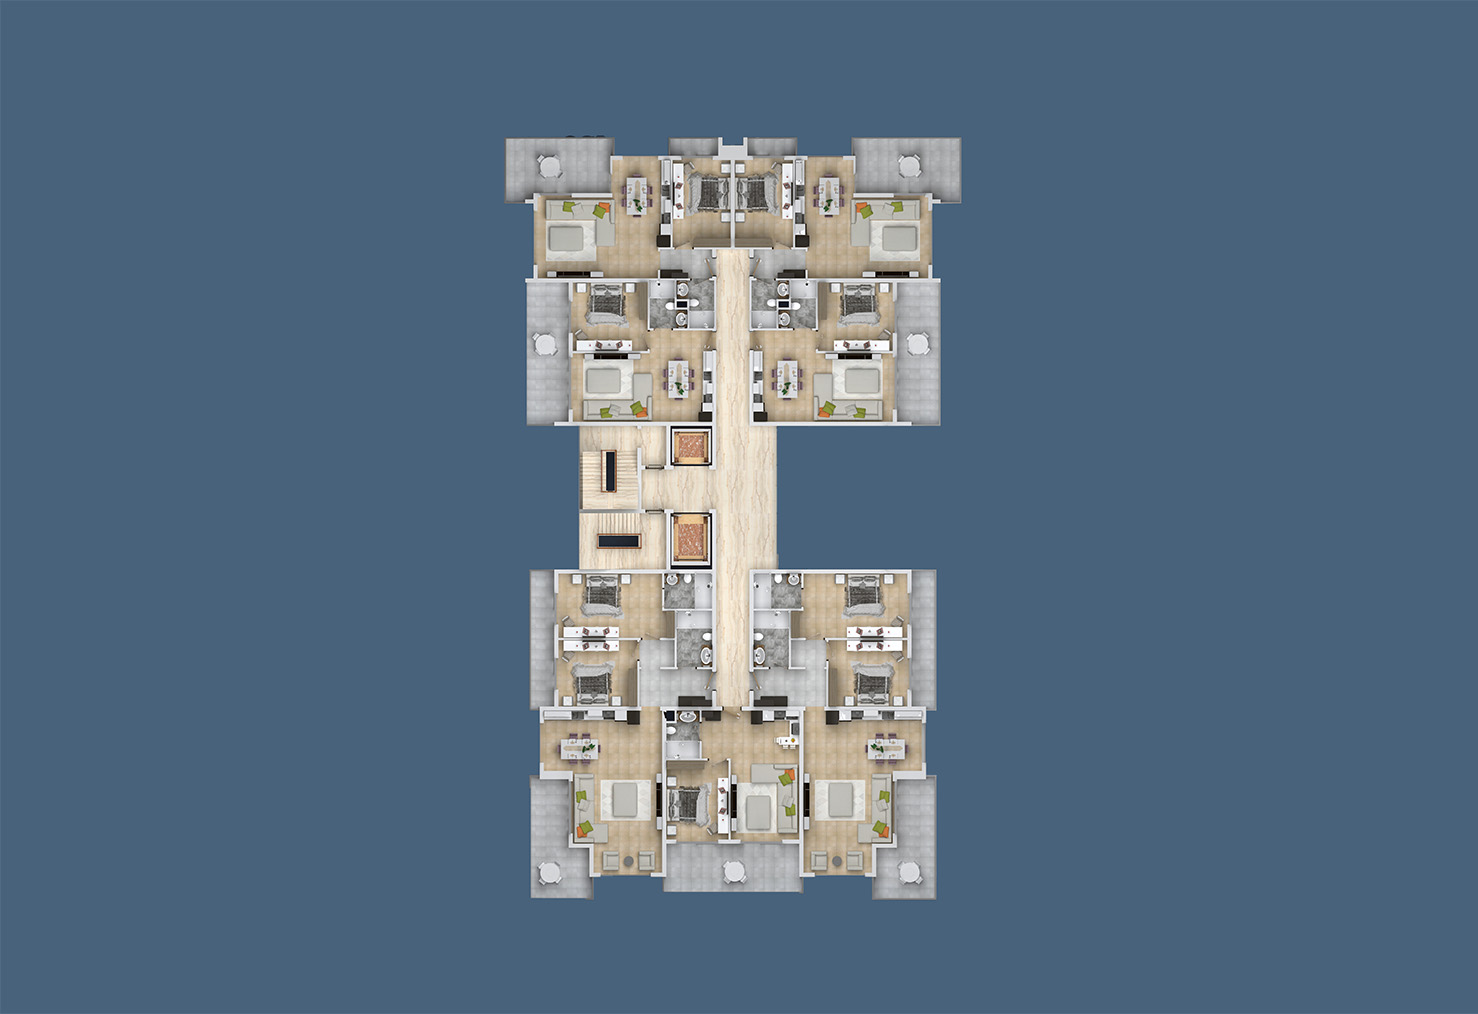 Gebäudeplan 3 Etage “D” Yekta Kingdom Trade Center